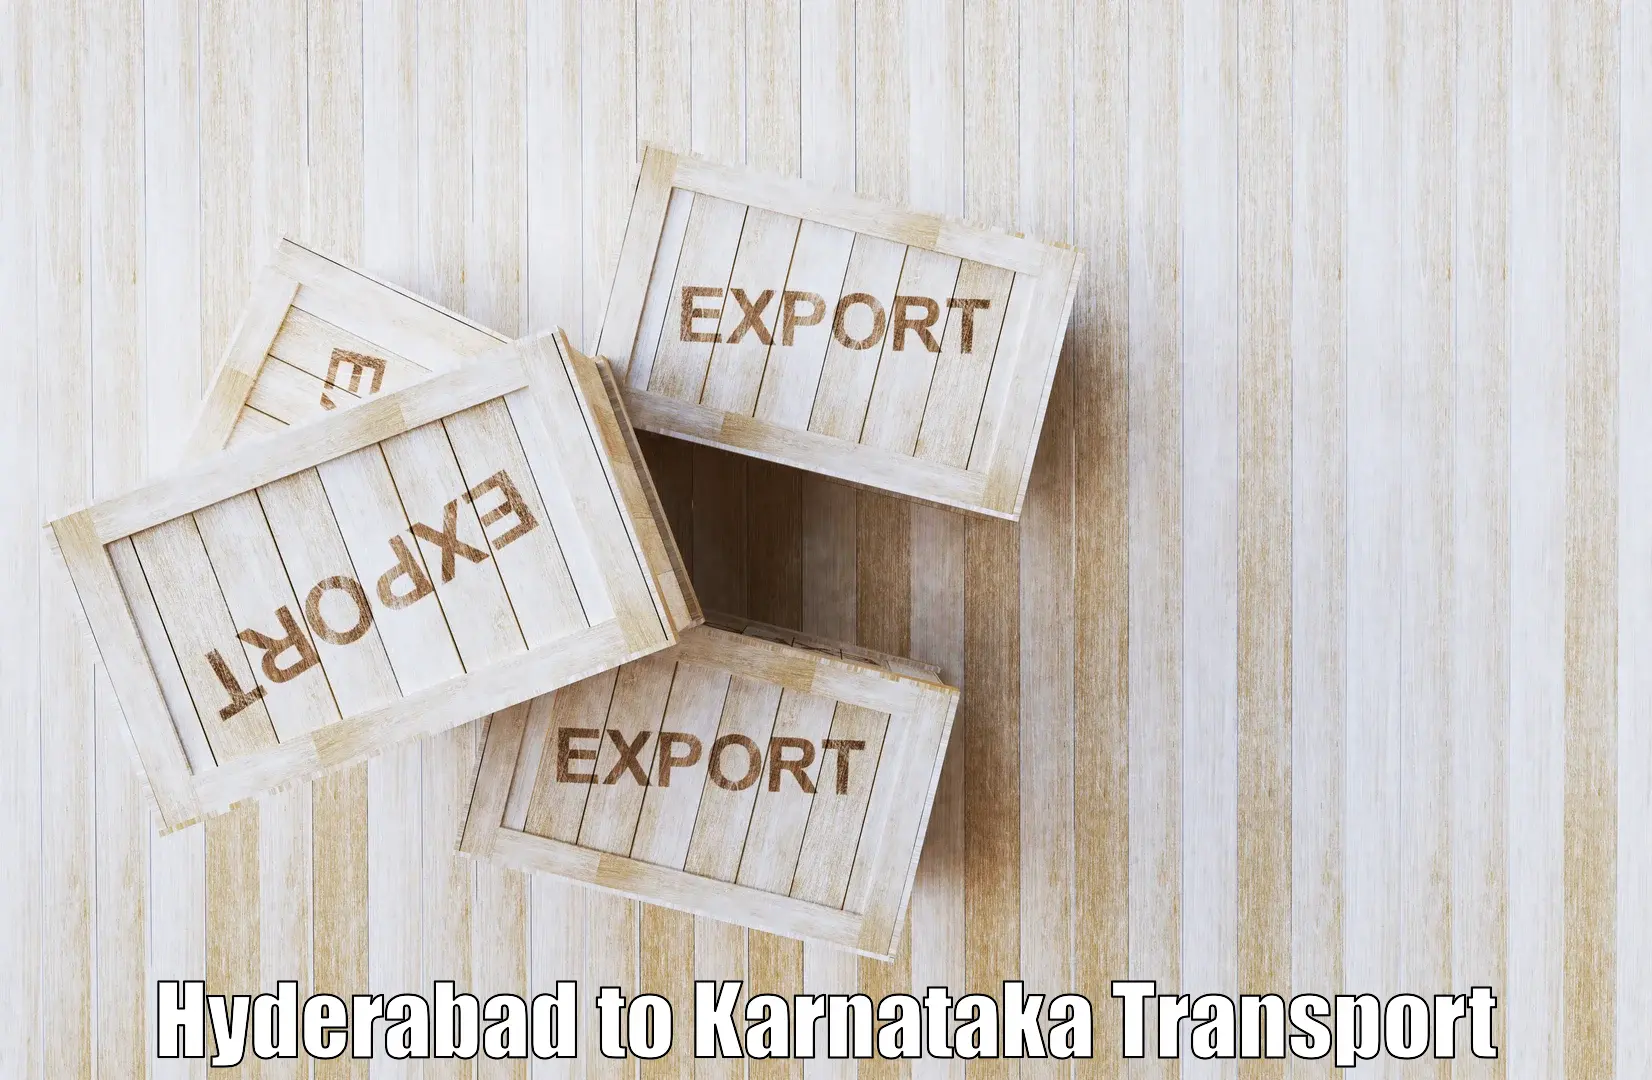 Nearest transport service Hyderabad to Karkala